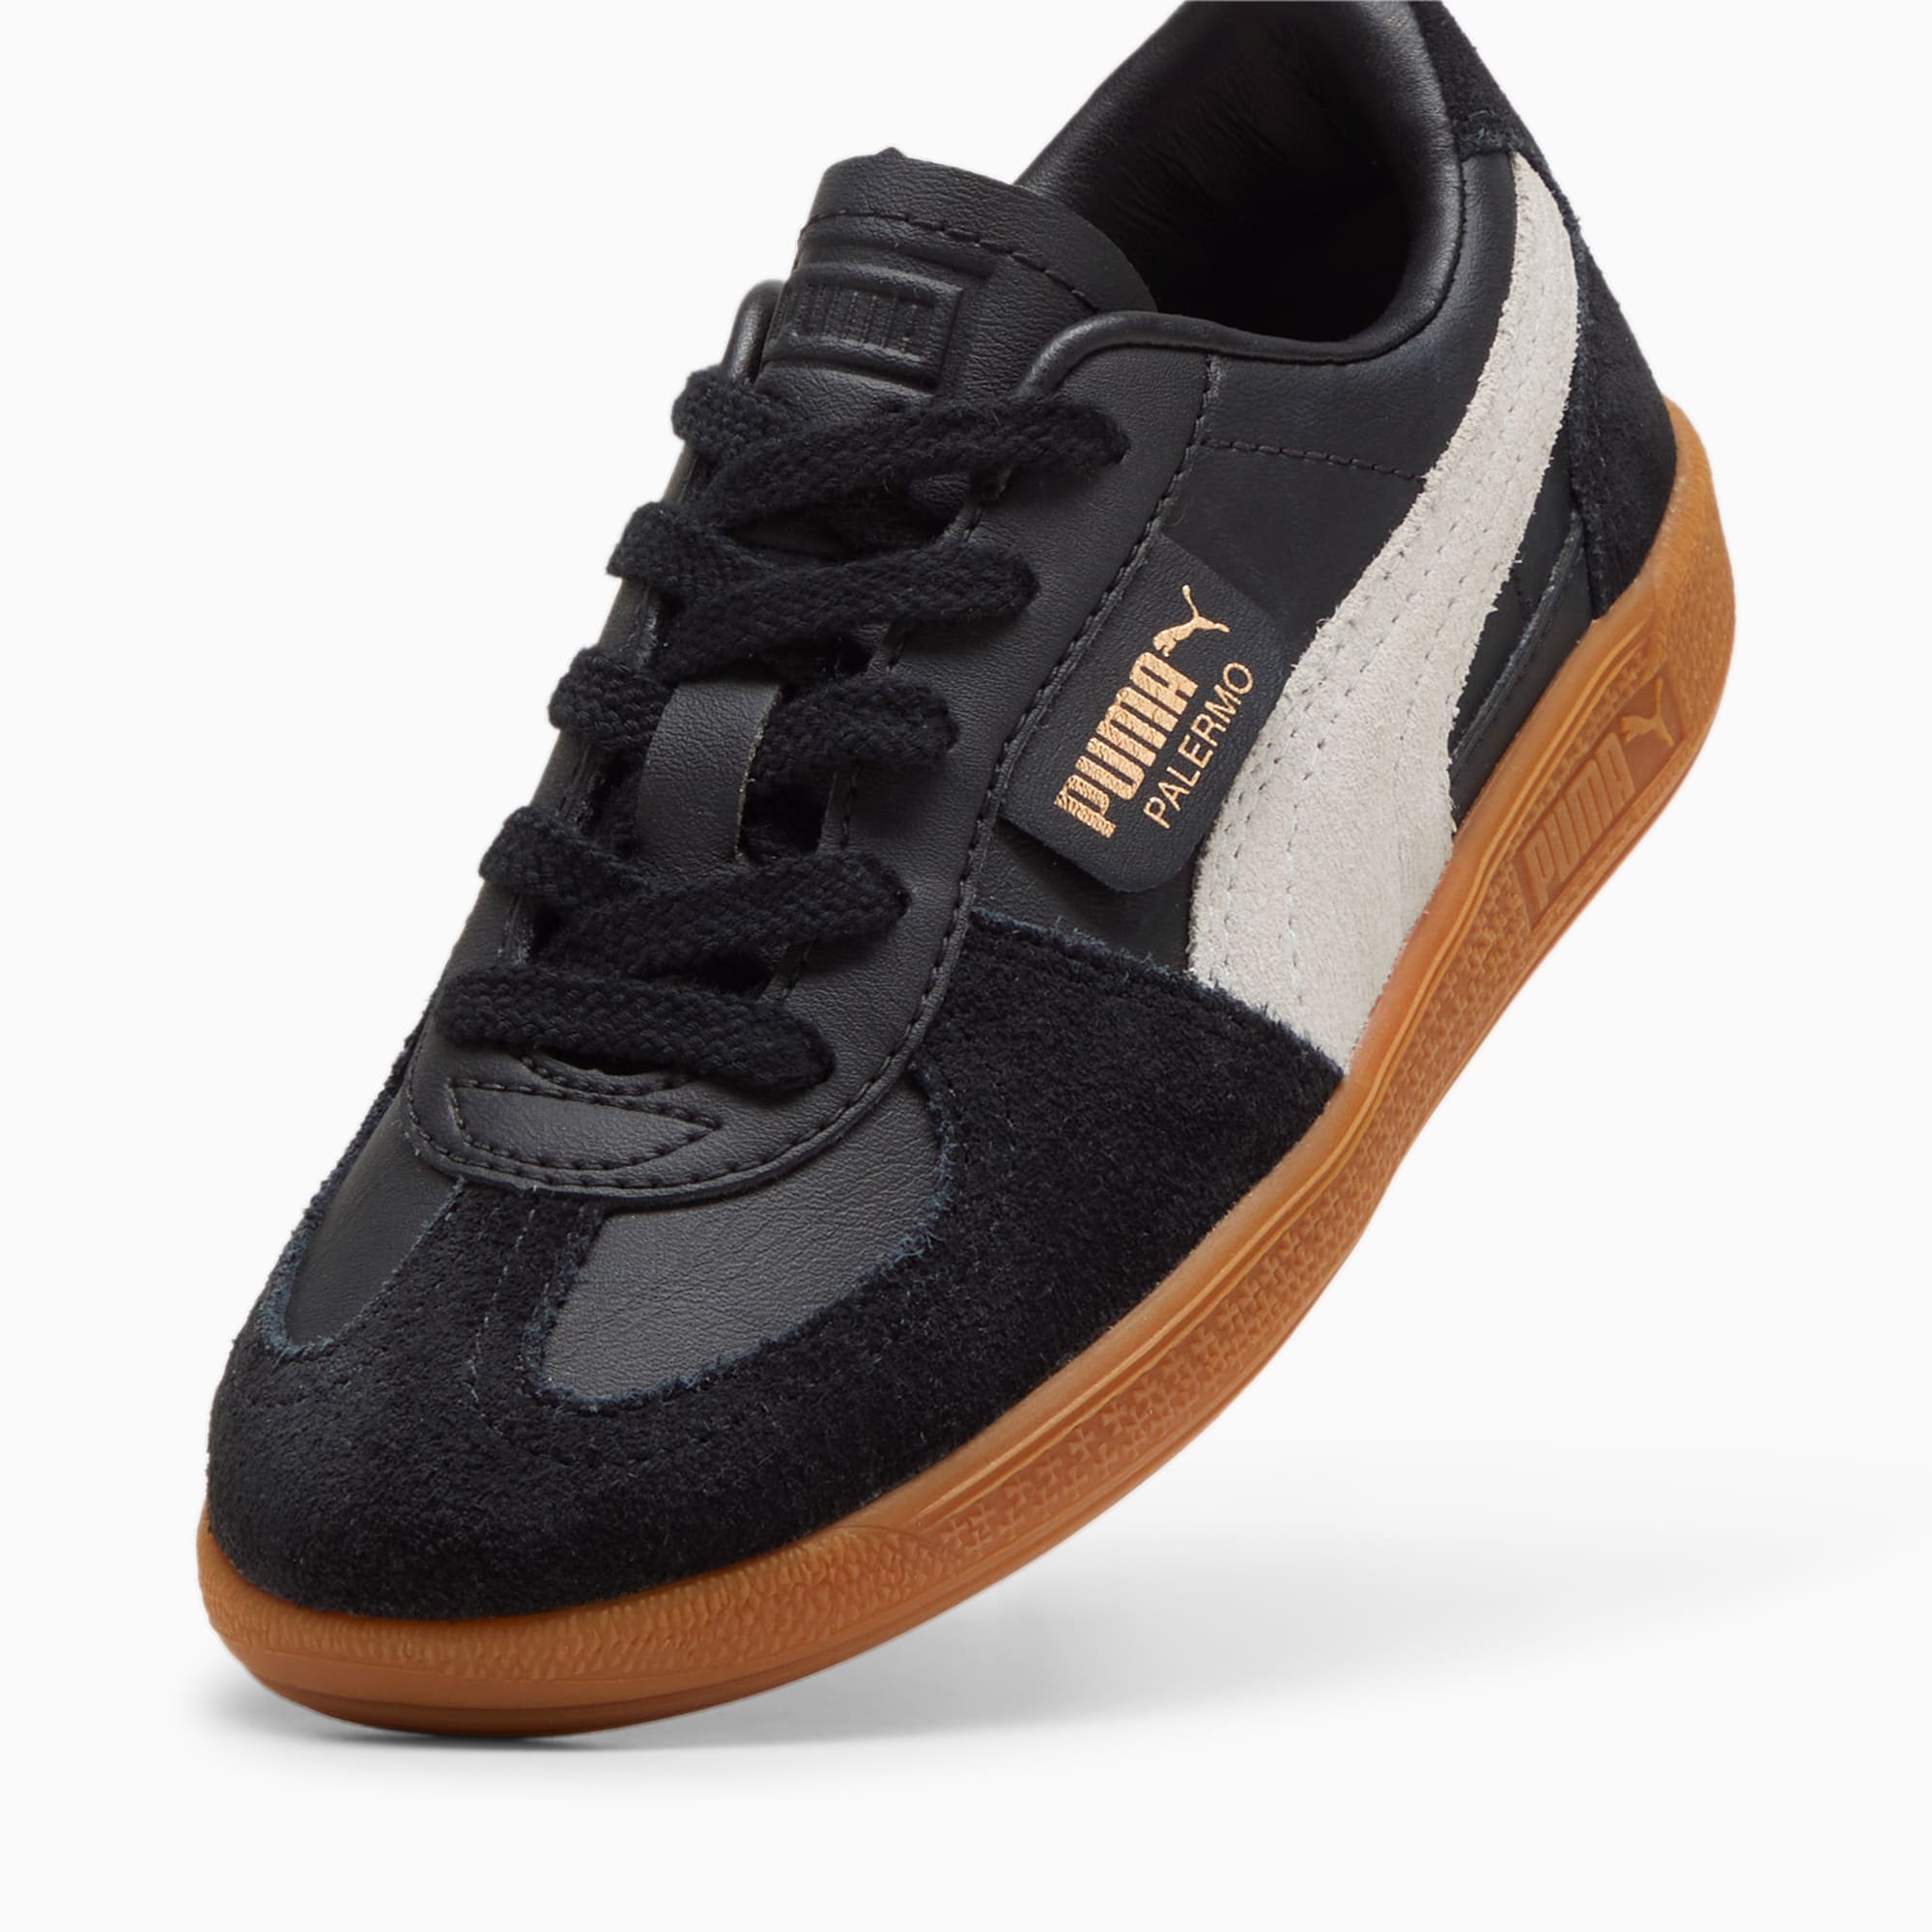 PUMA Palermo Lth Sneakers Kinder Schuhe, Schwarz/Grau, Größe: 27.5, Schuhe